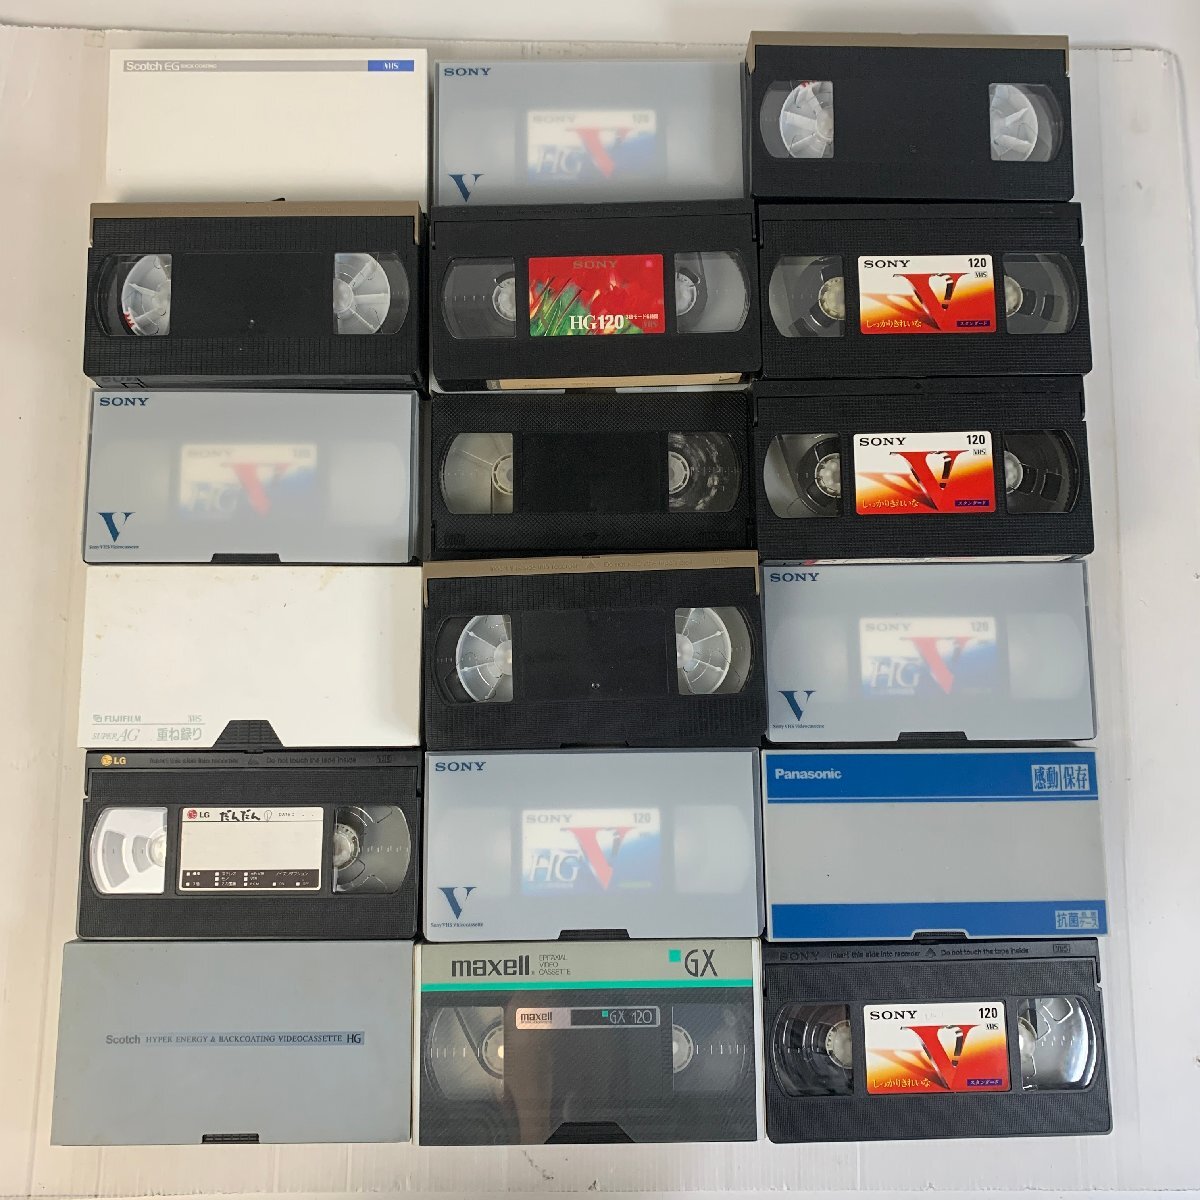 Y5-938 使用済み VHS ビデオテープ 54本セット SONY/TDK/マクセル/スコッチ/パナソニック/ビクター HG*XZ*XG*HGX*XD等 100サイズ 愛知の画像4